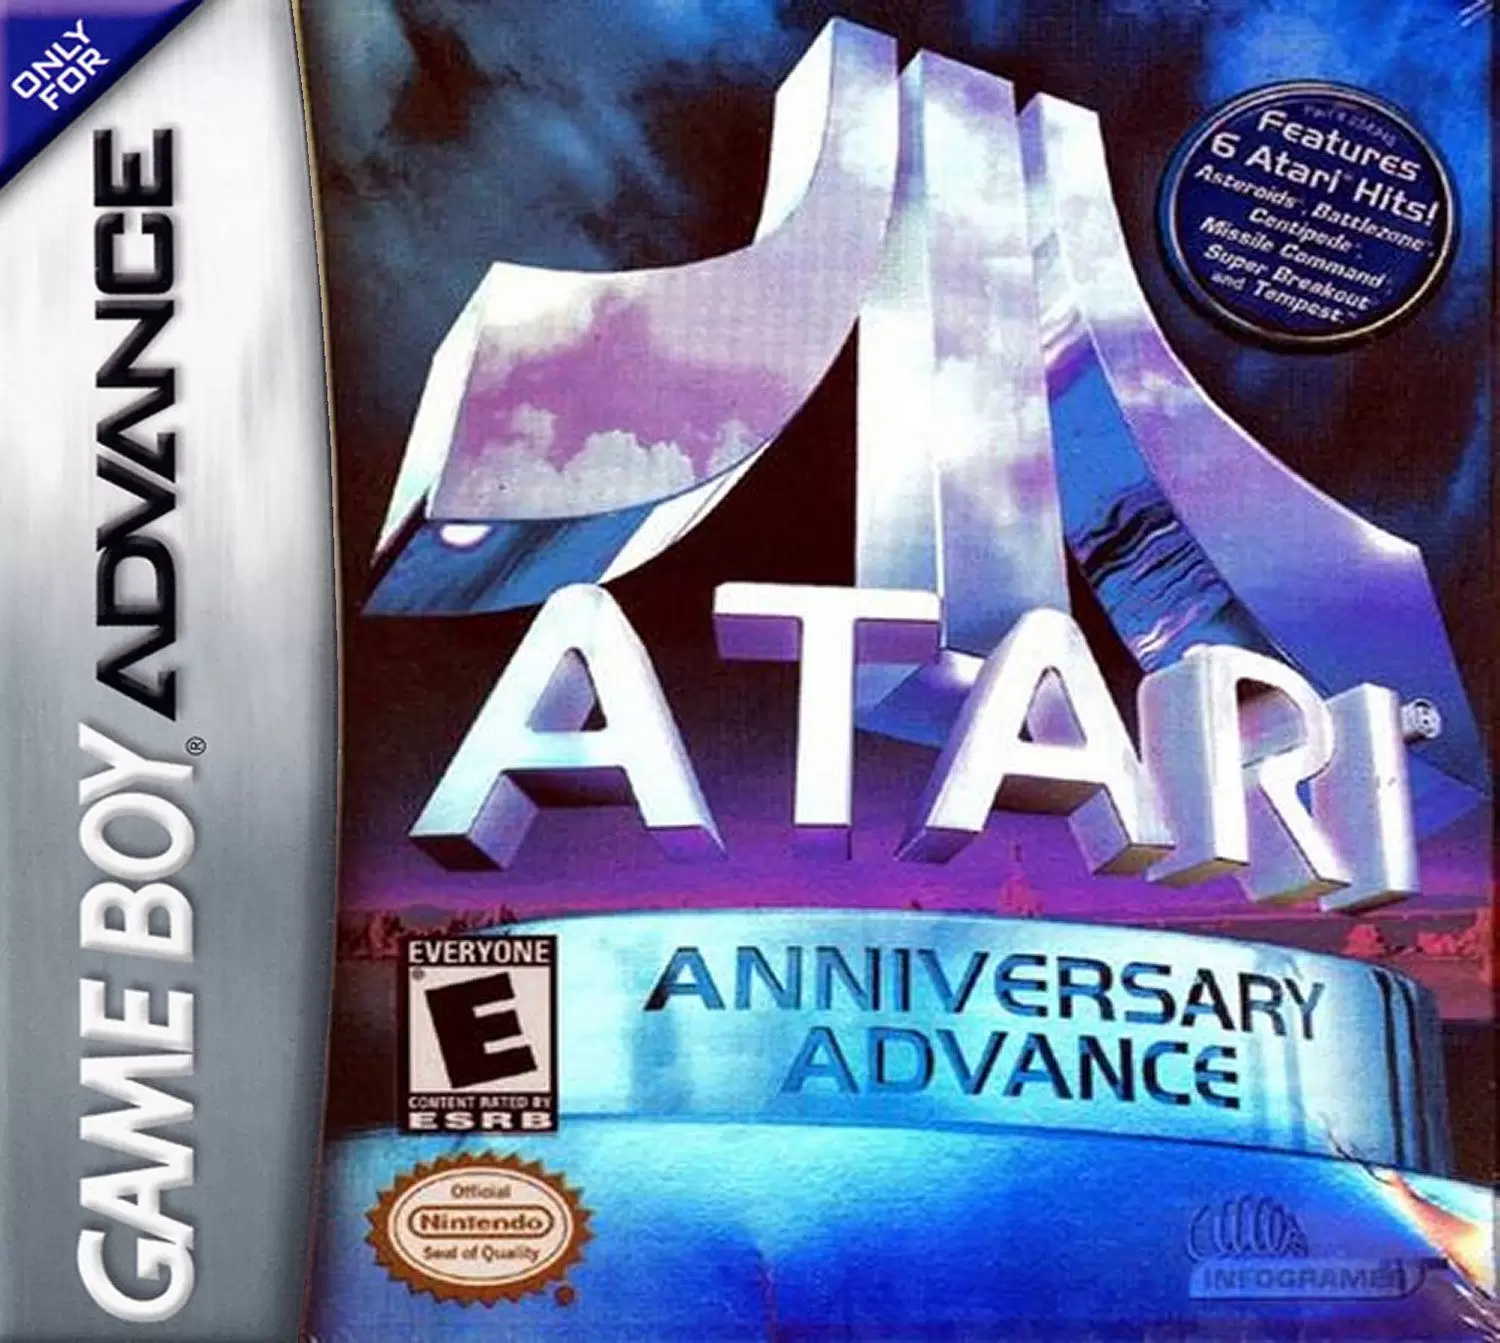 Game Boy Advance Games - Atari Anniversary Advance